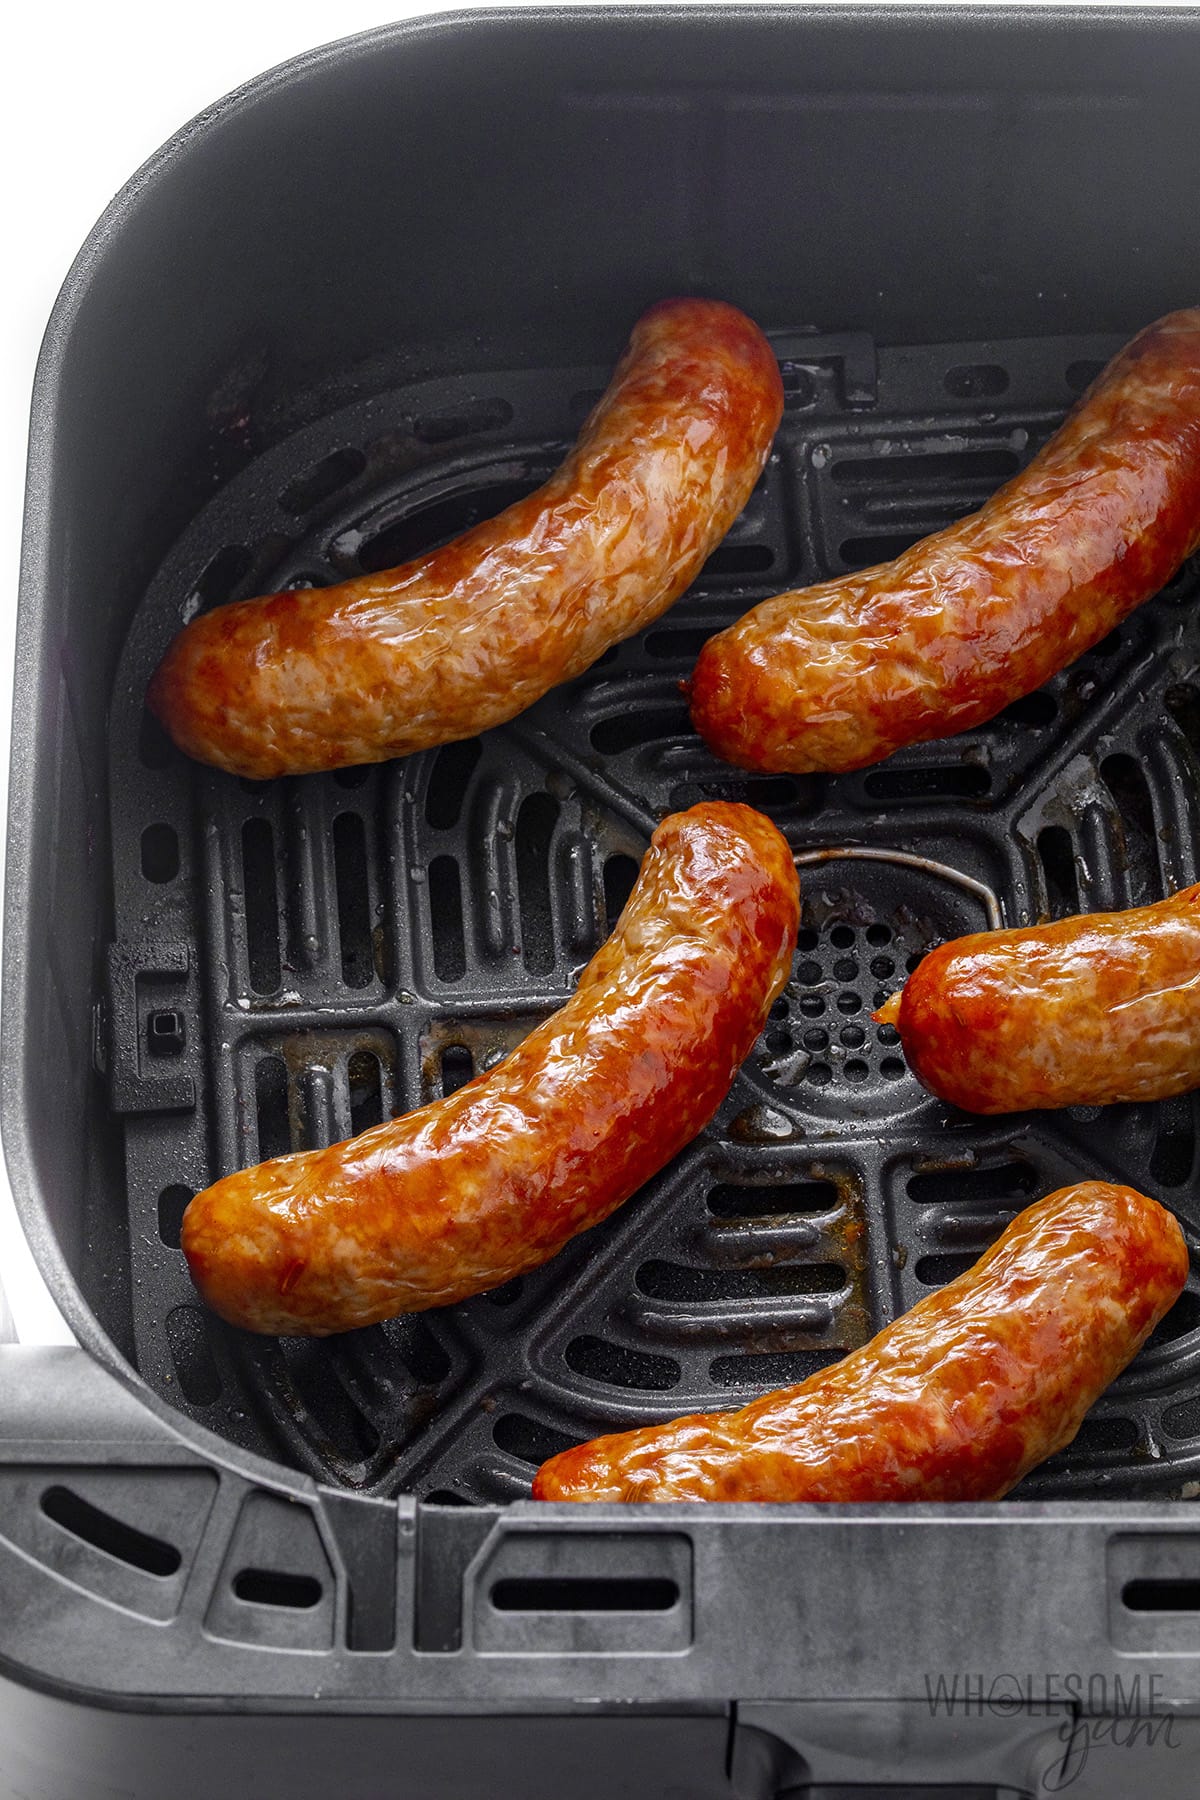 Sausage in air fryer basket.